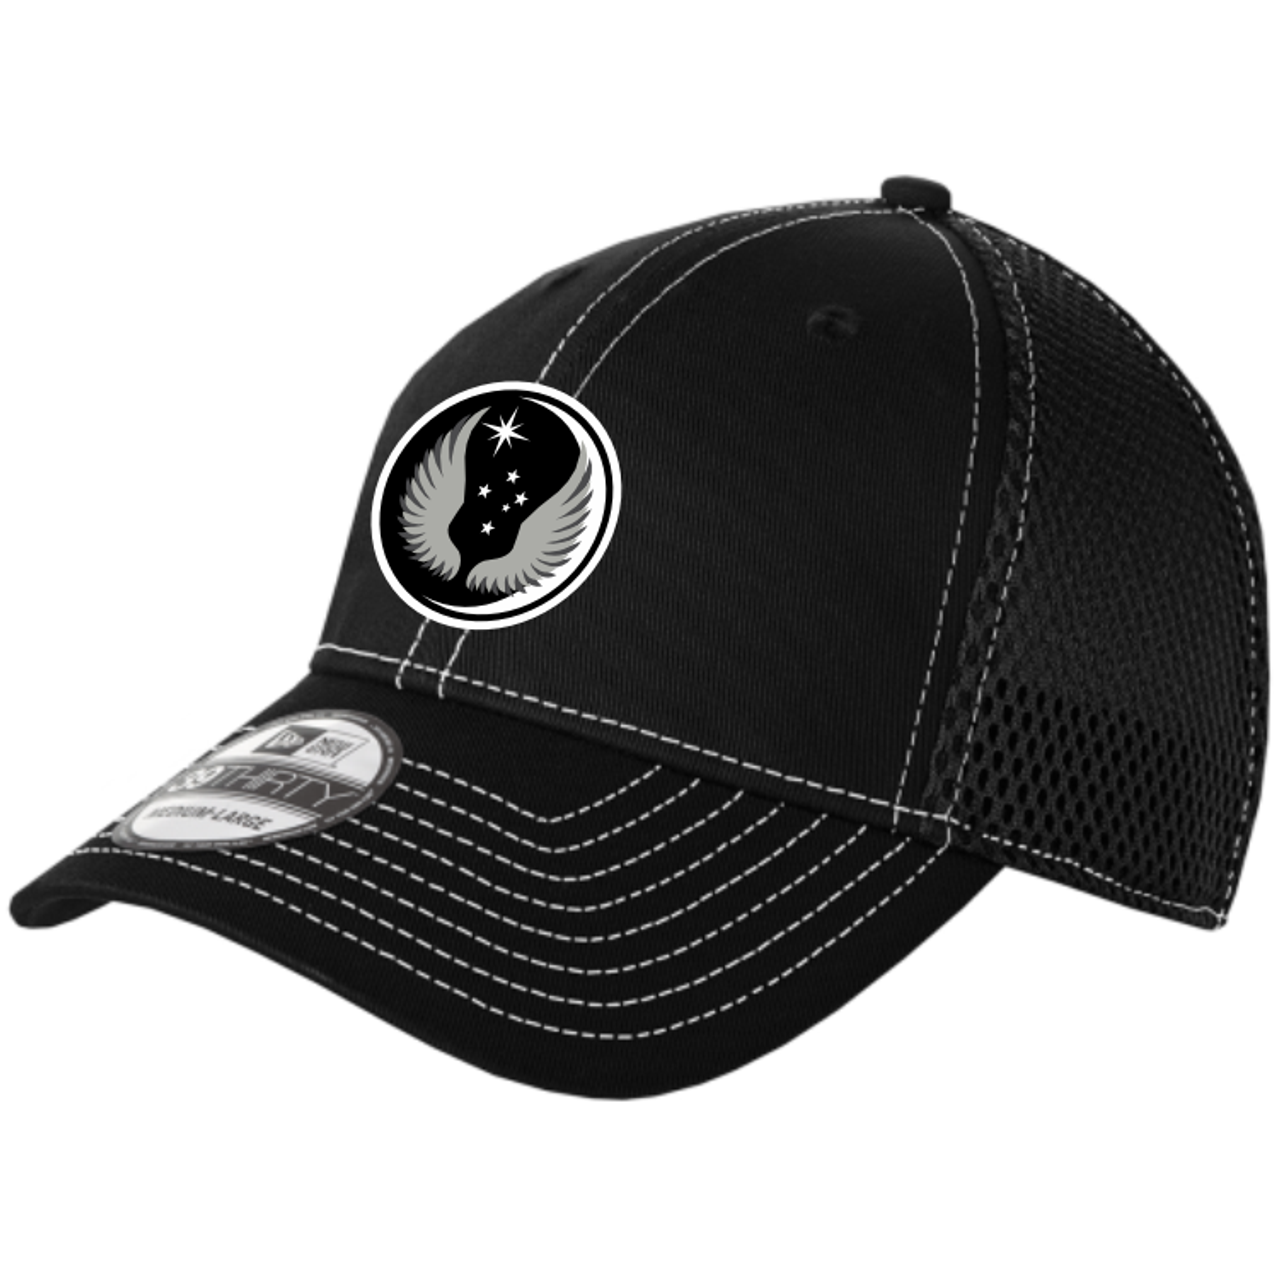 818 MSAS Mesh-Back FlexFit Hat, Black/White